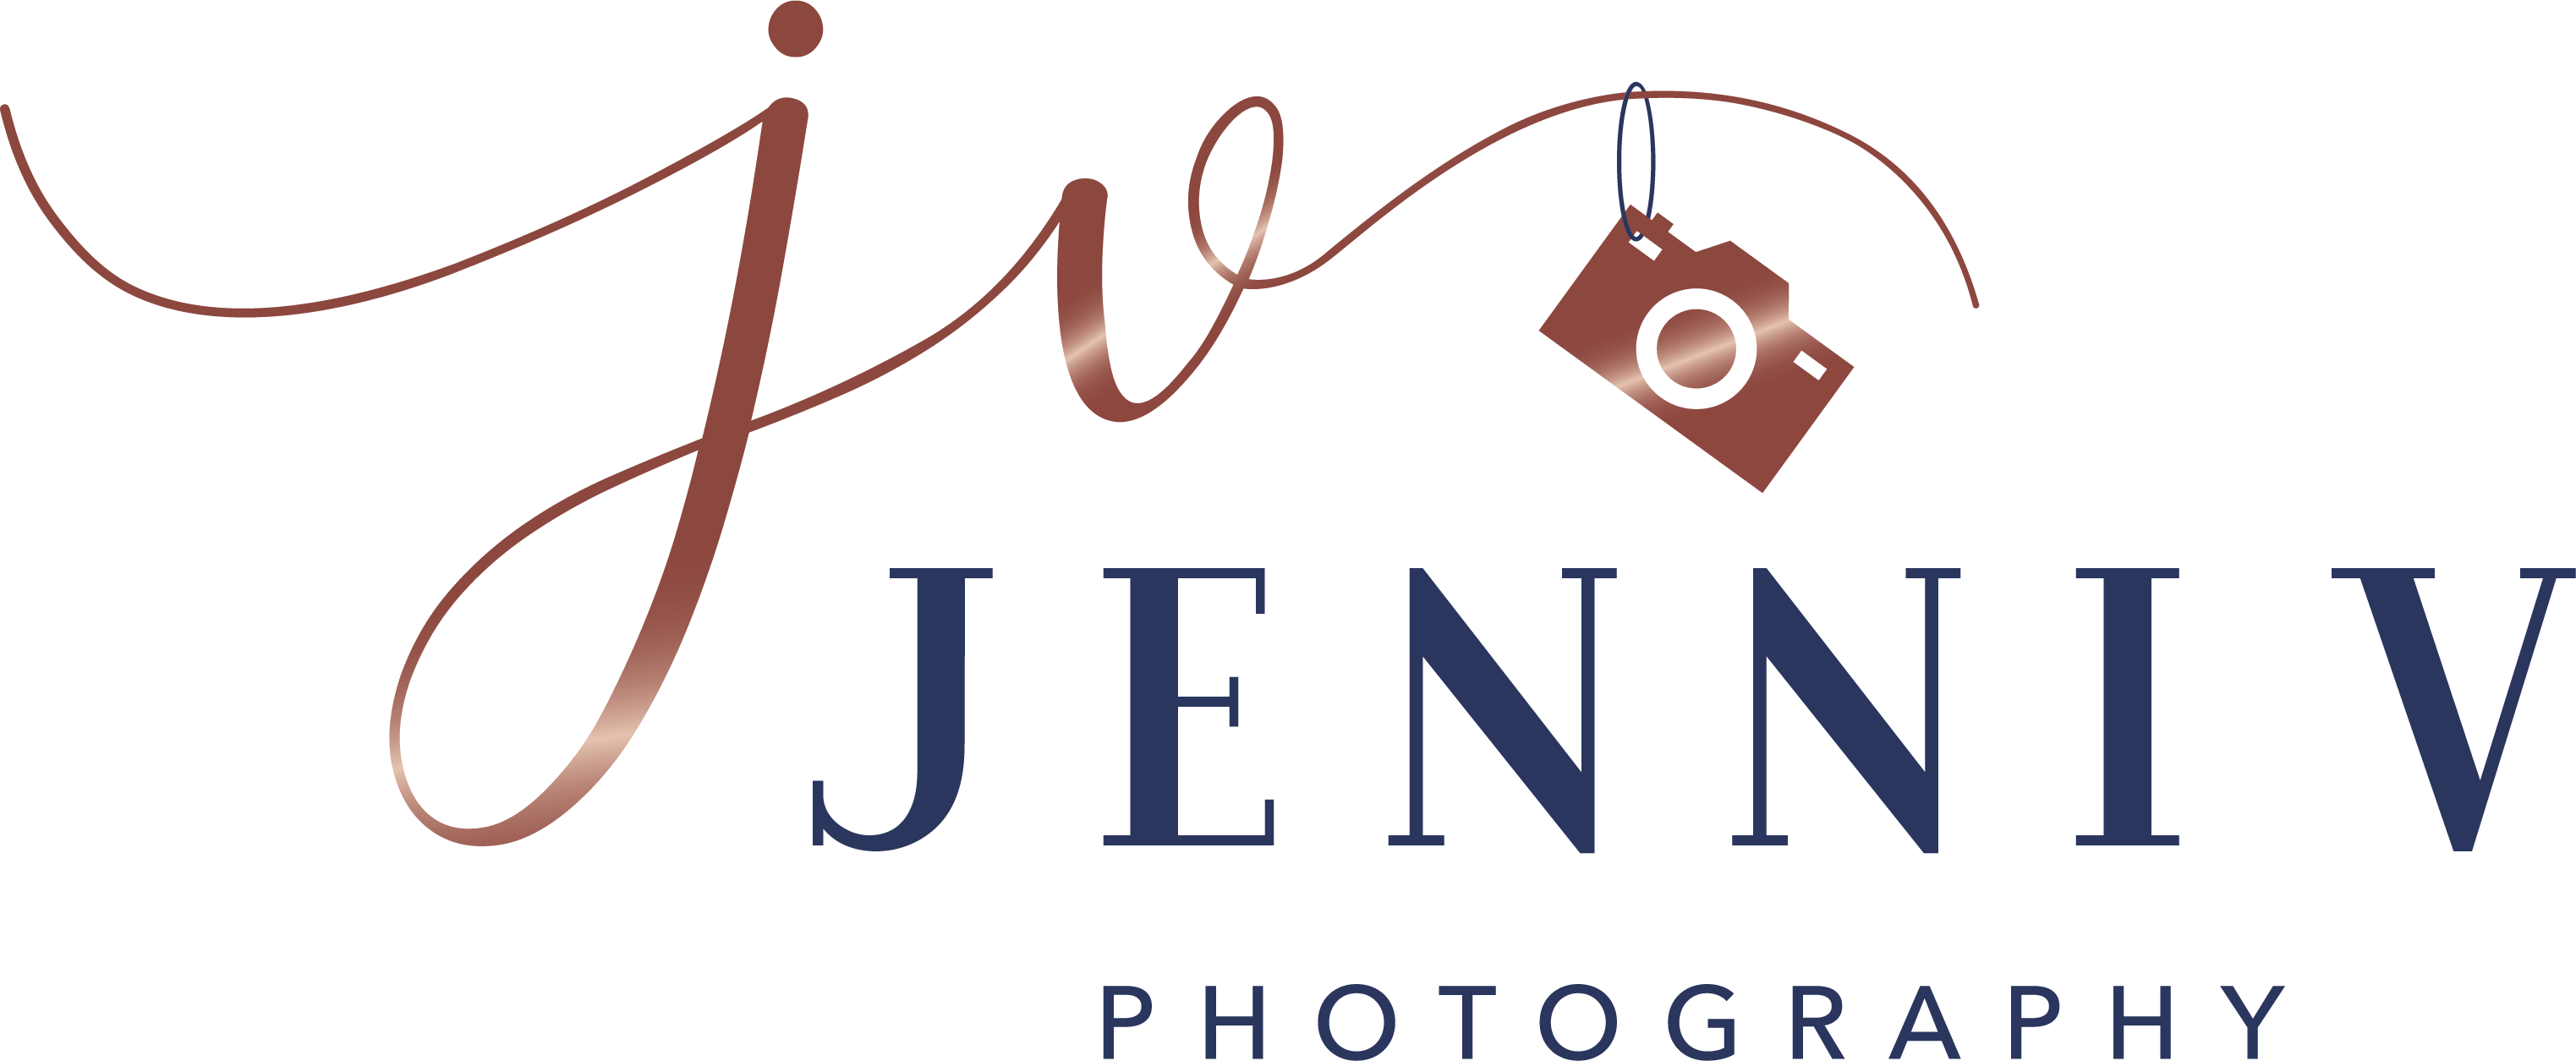 Jenni V Photography - HOME